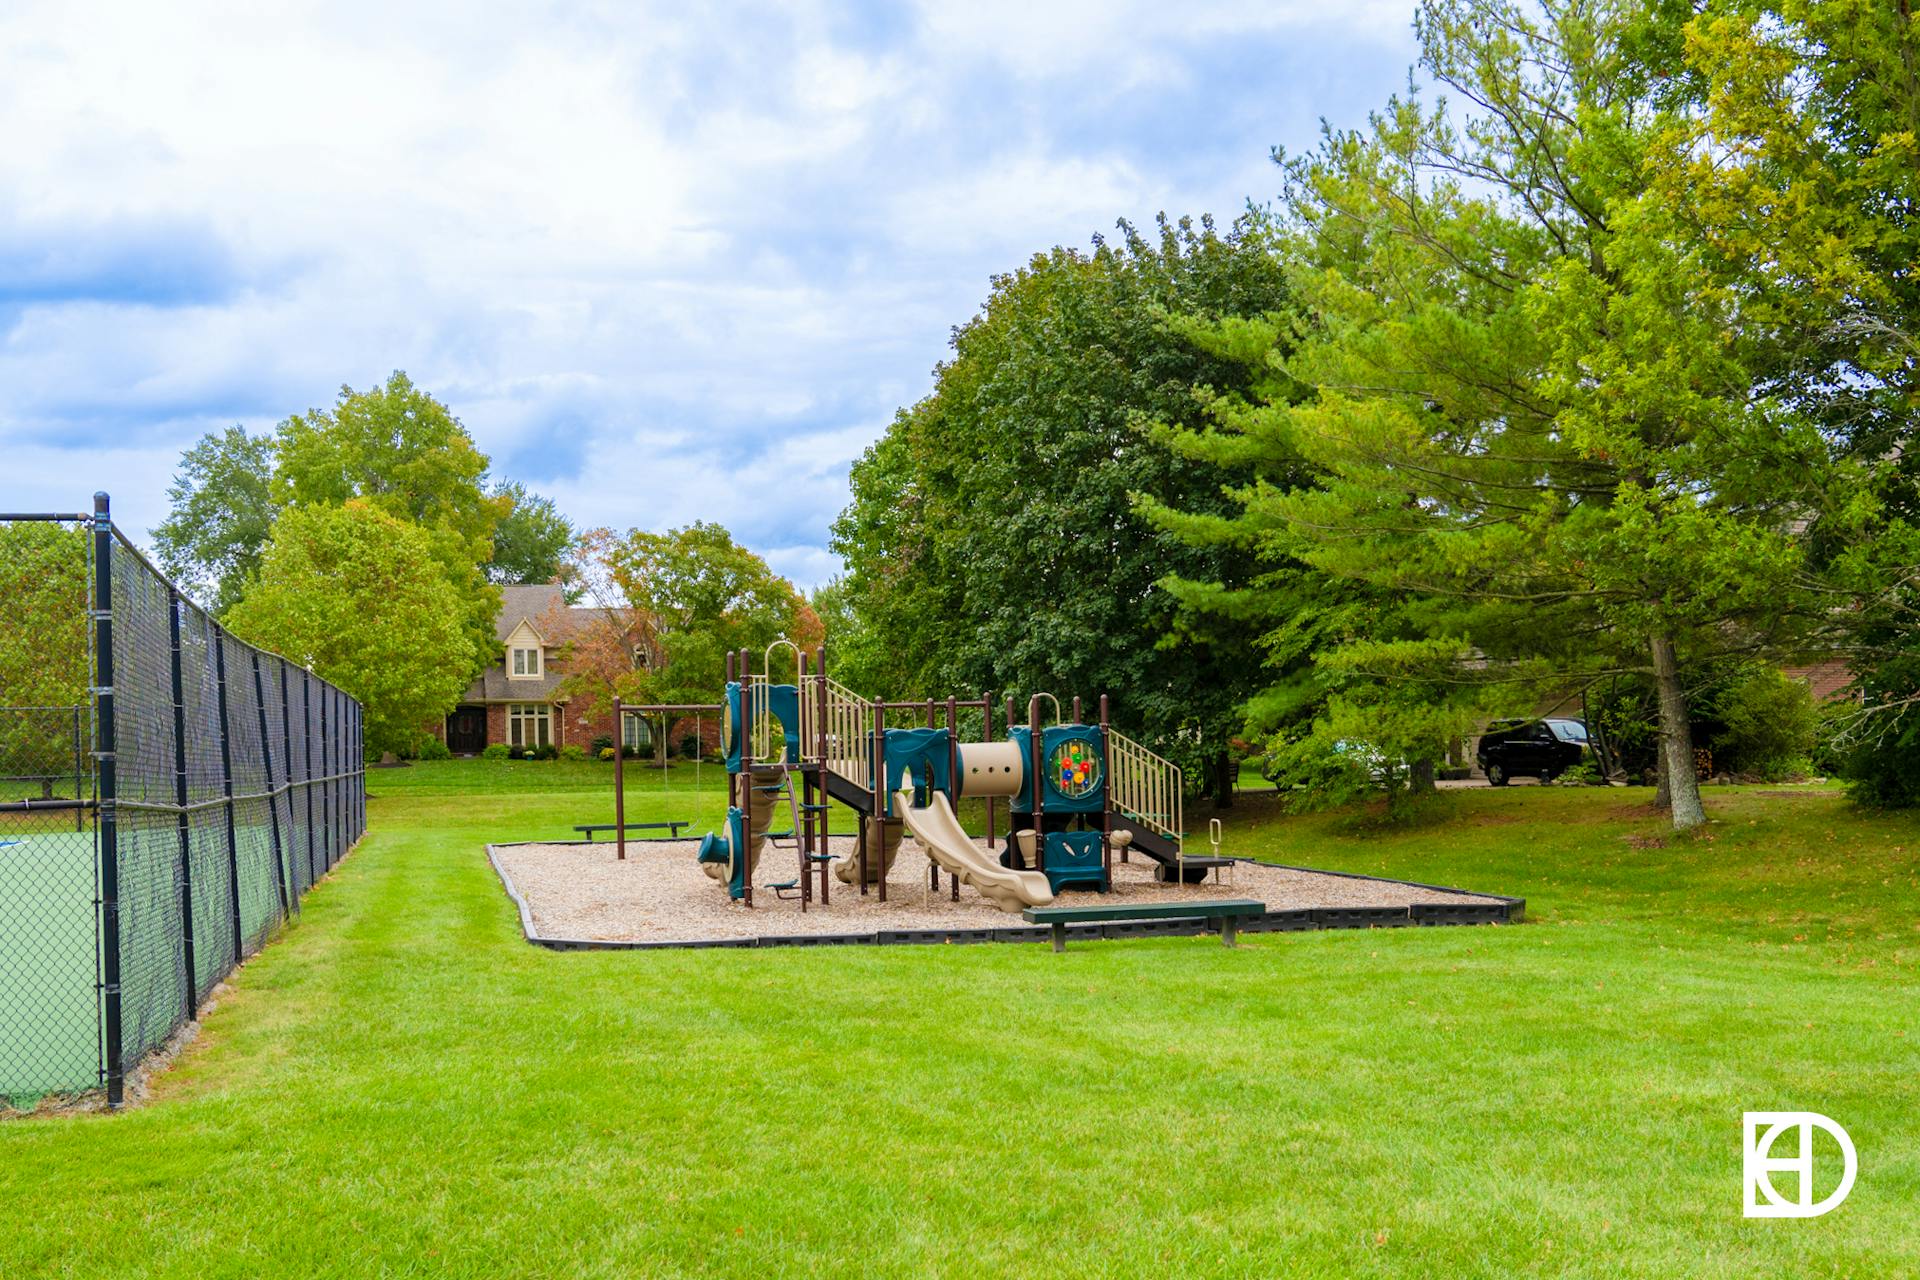 Photo of playground in Thornhill neighborhood in Zionsville, Indiana.